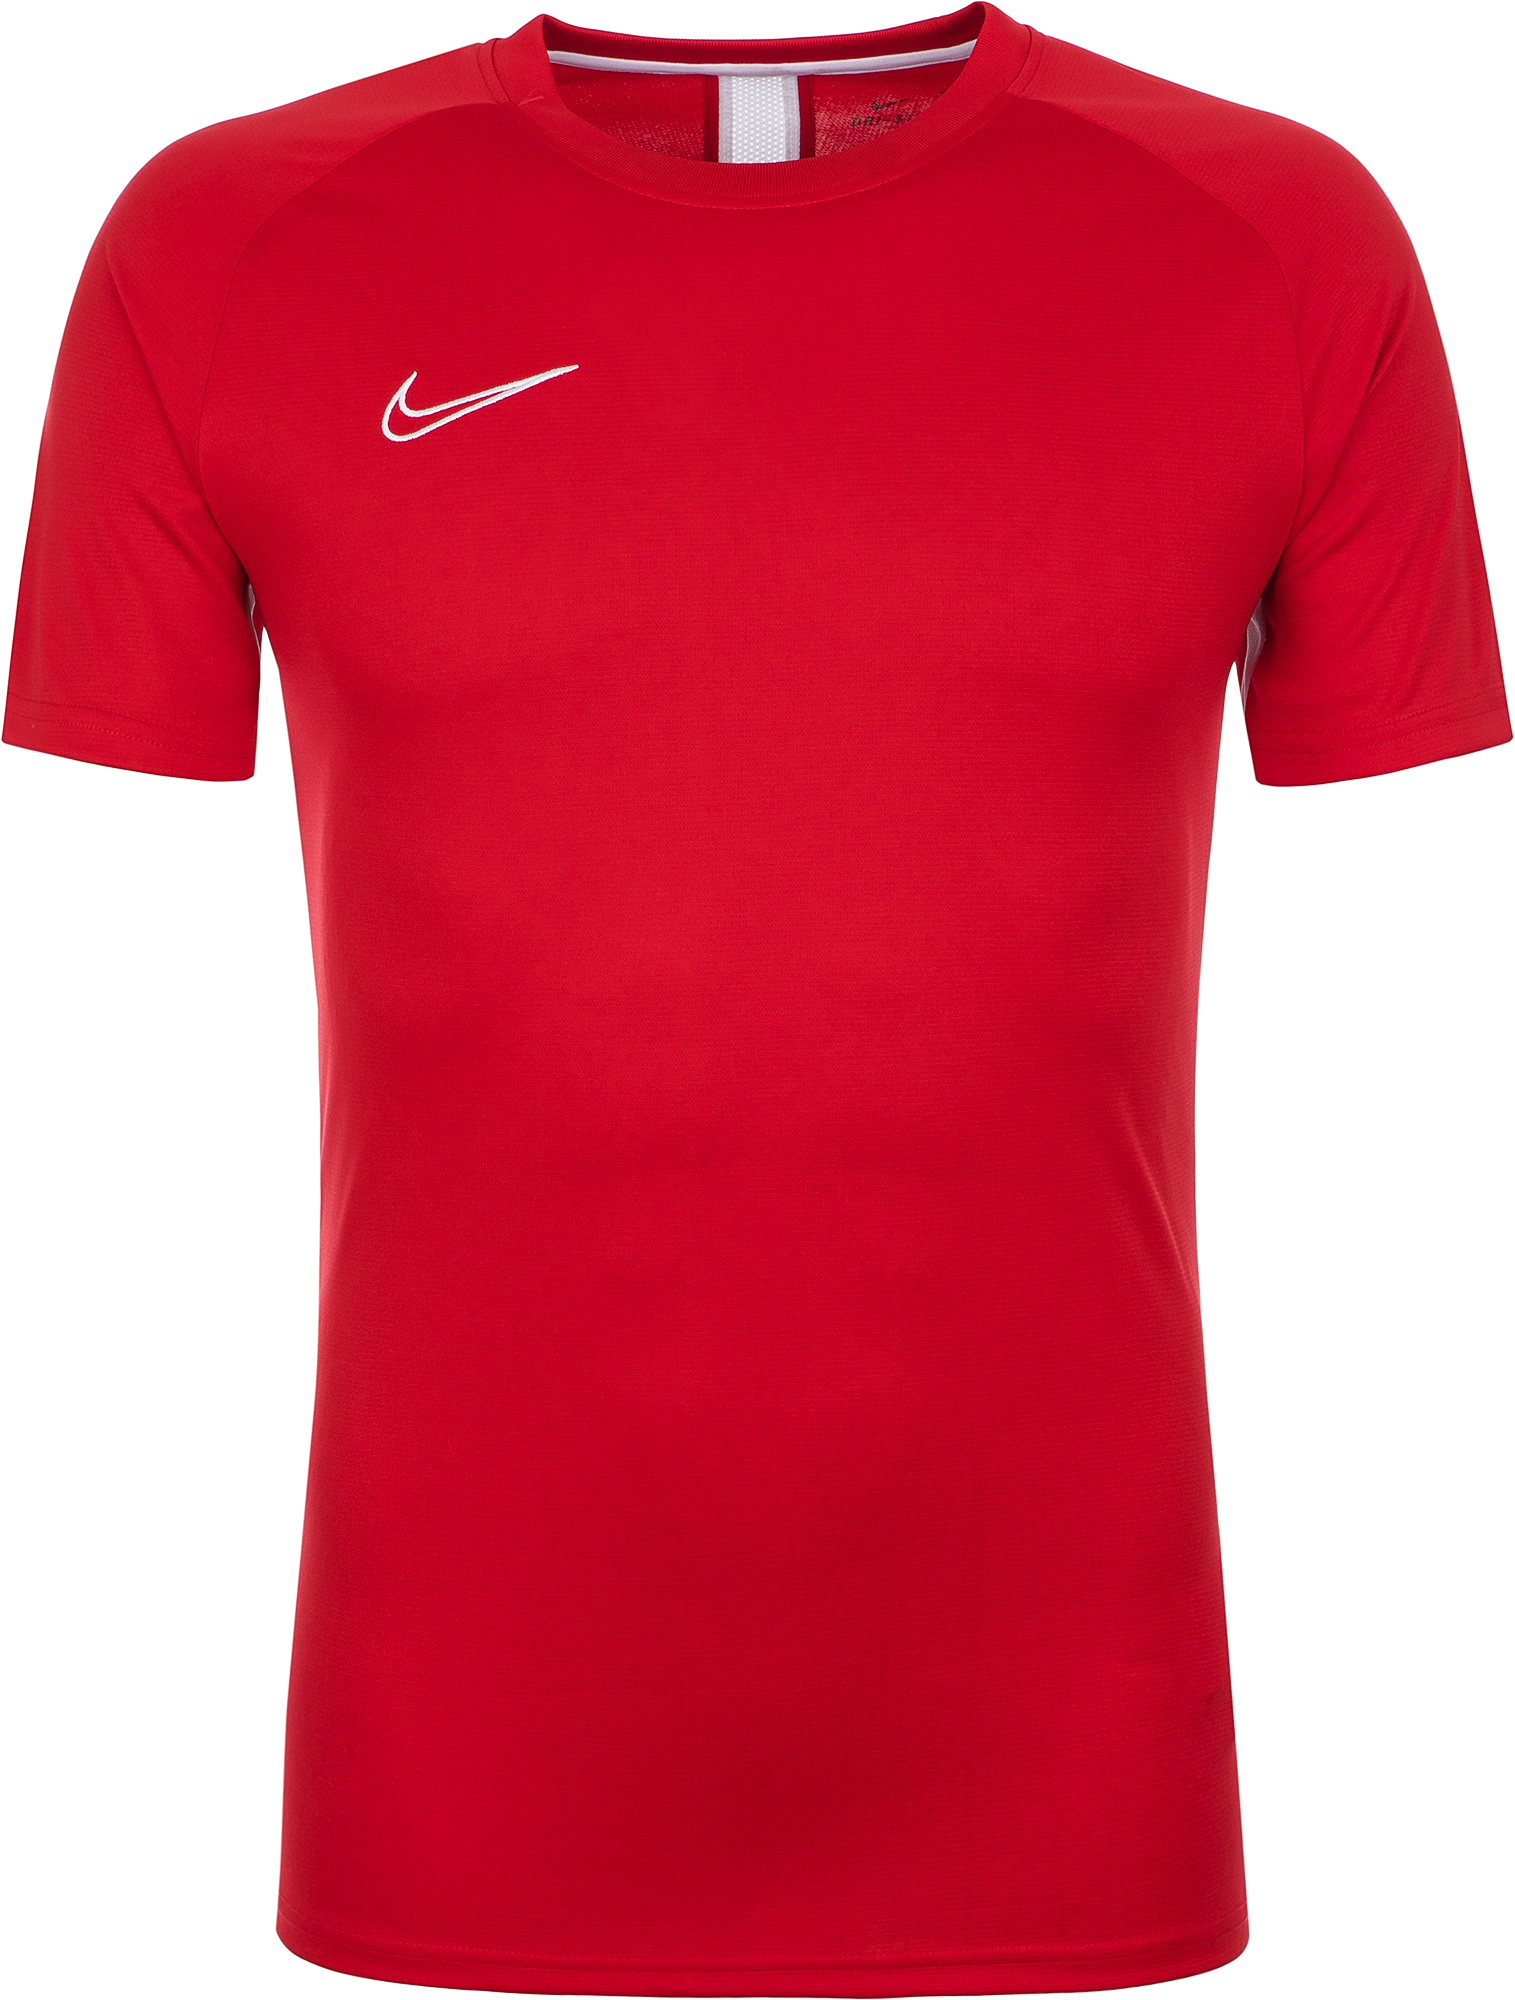 Nike Футболка мужская Nike Dry Academy, размер 52-54